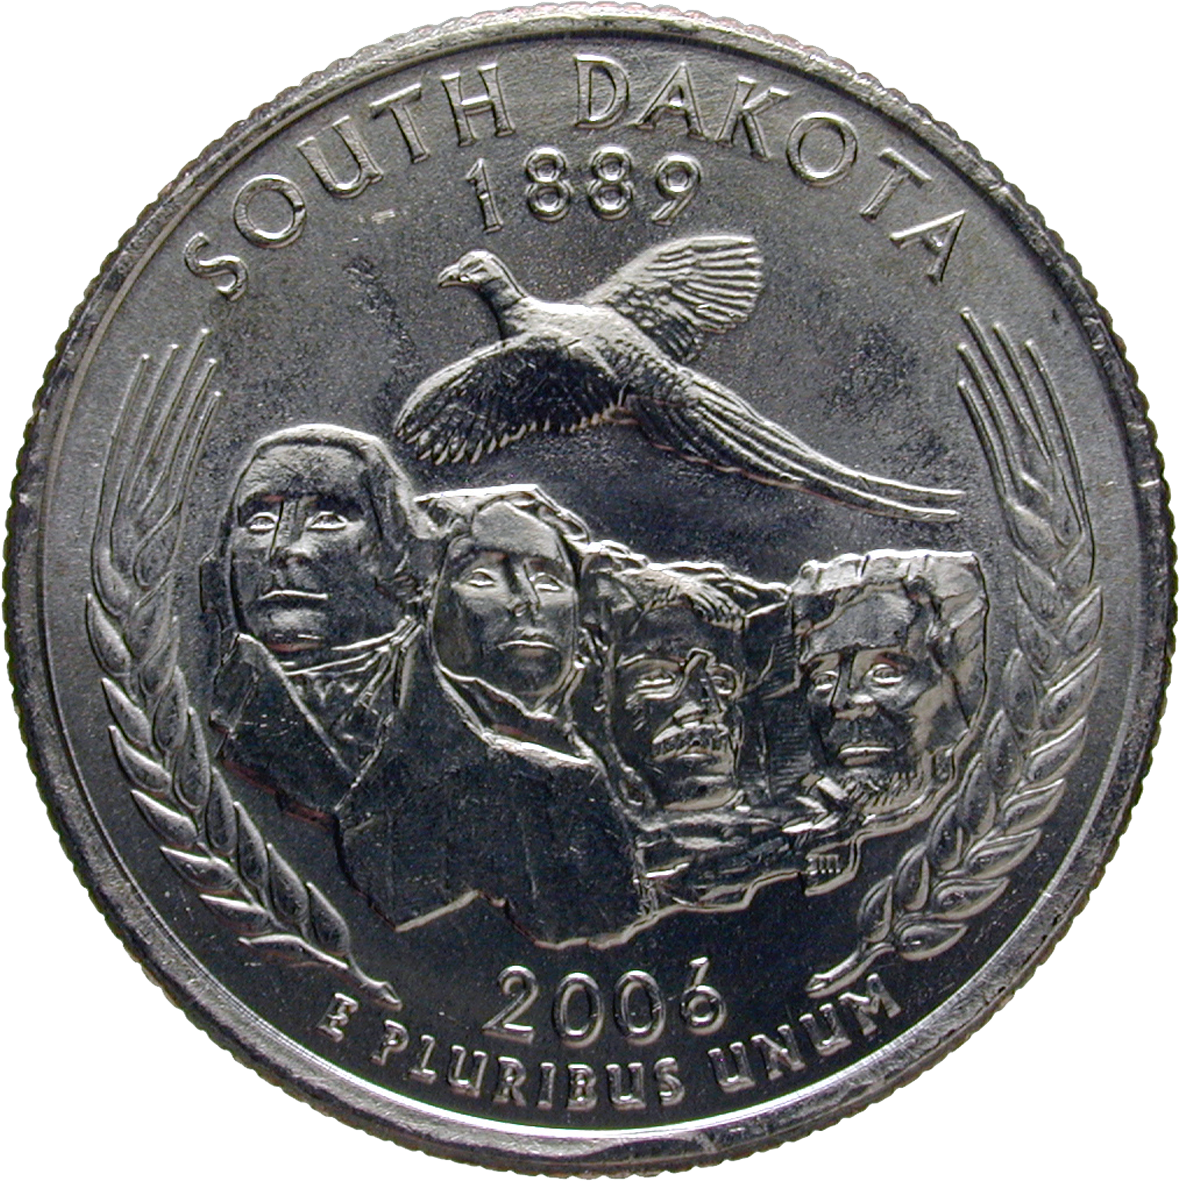 United States of America, Quarter Dollar 2006 (reverse)